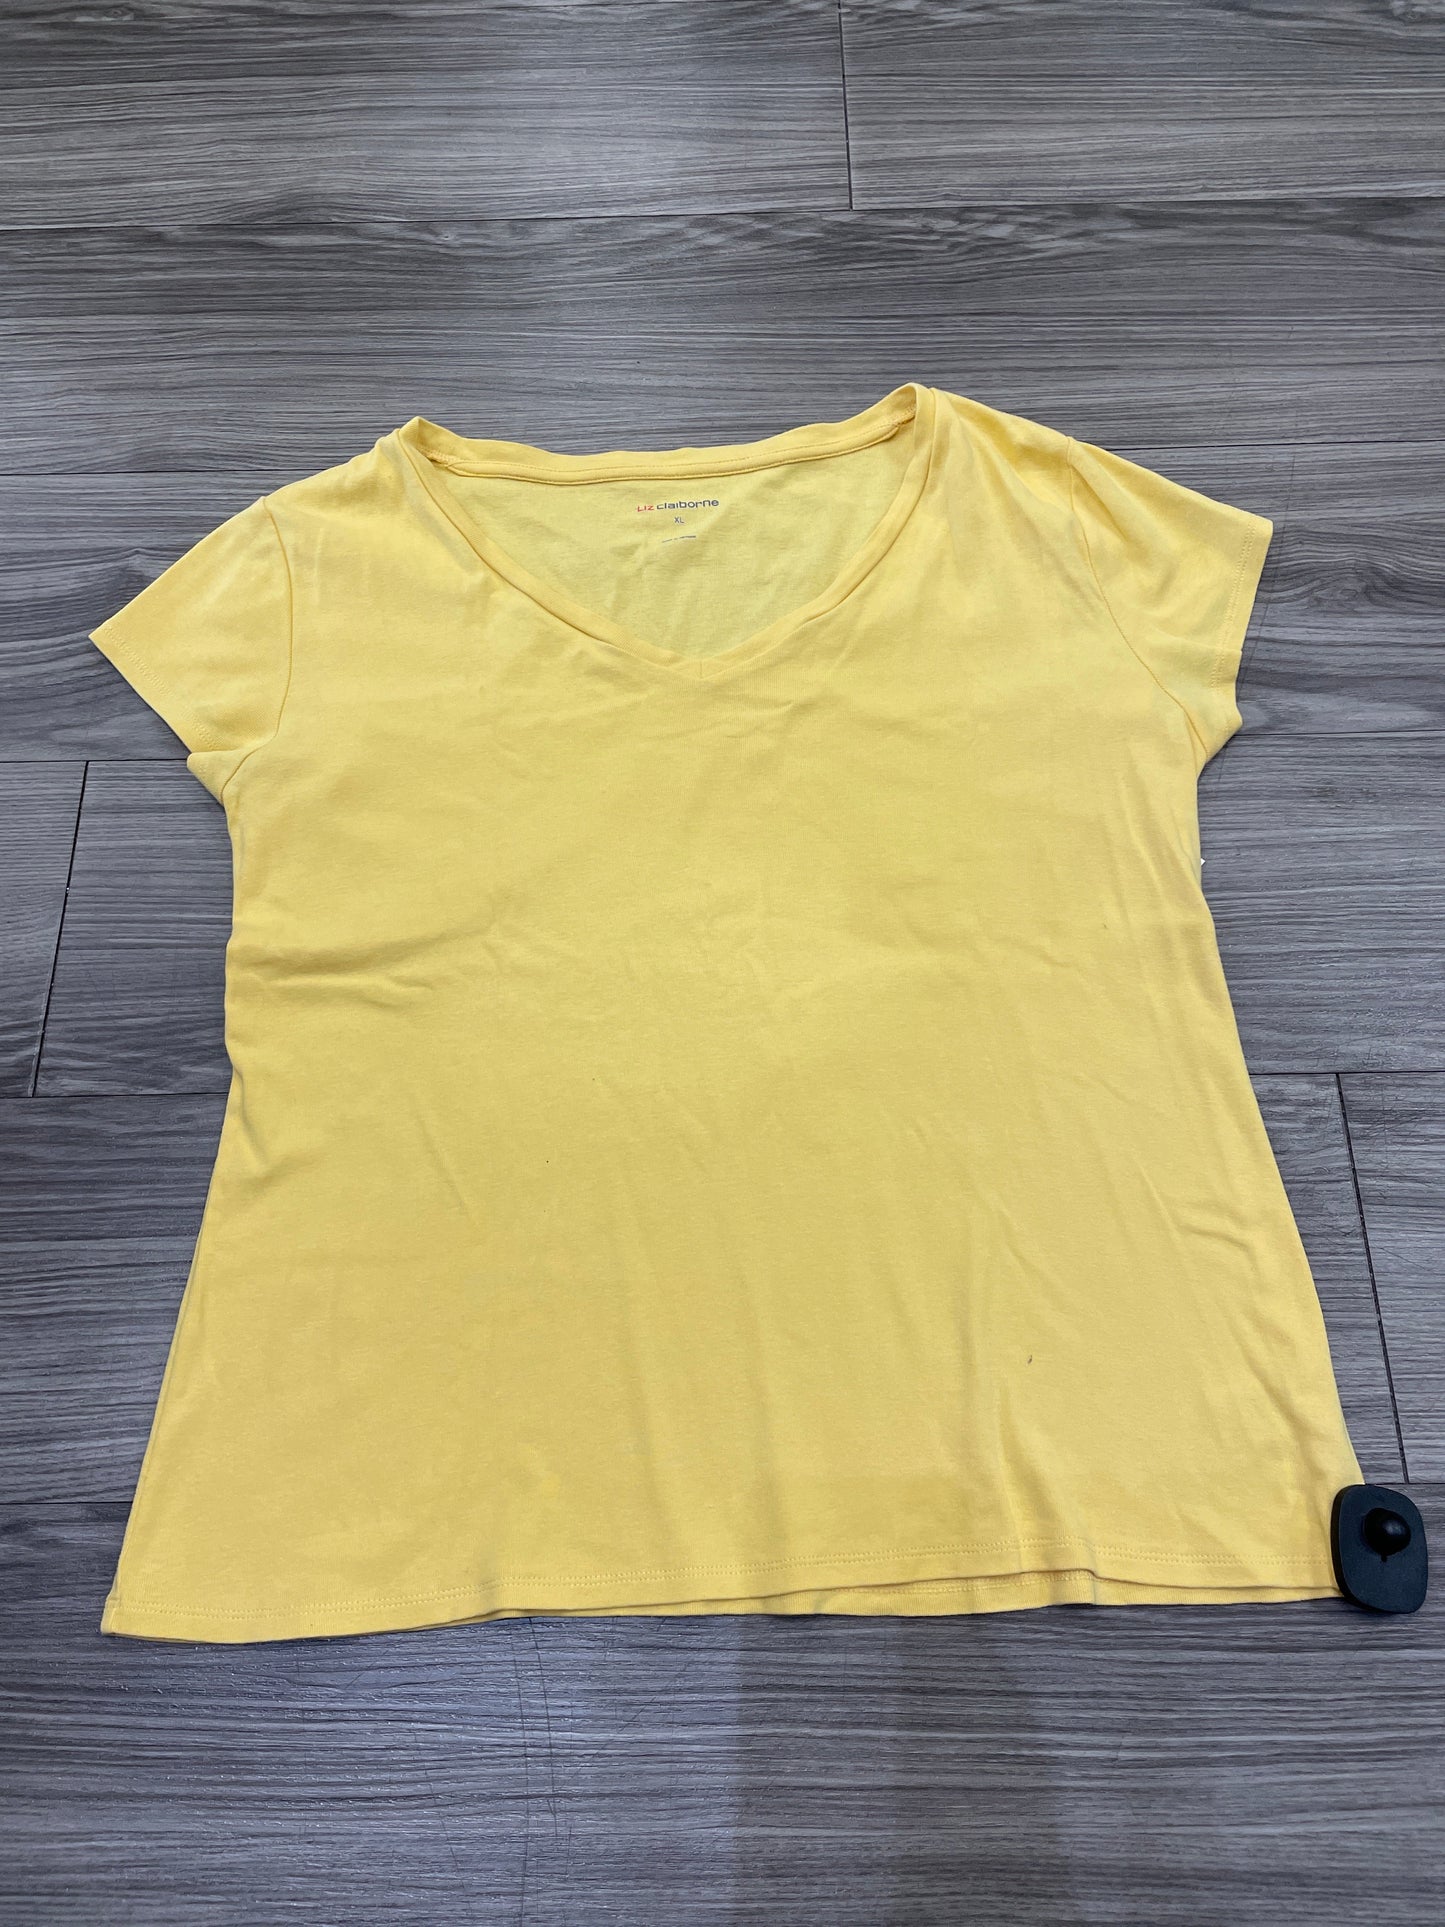 Yellow Top Short Sleeve Liz Claiborne, Size Xl